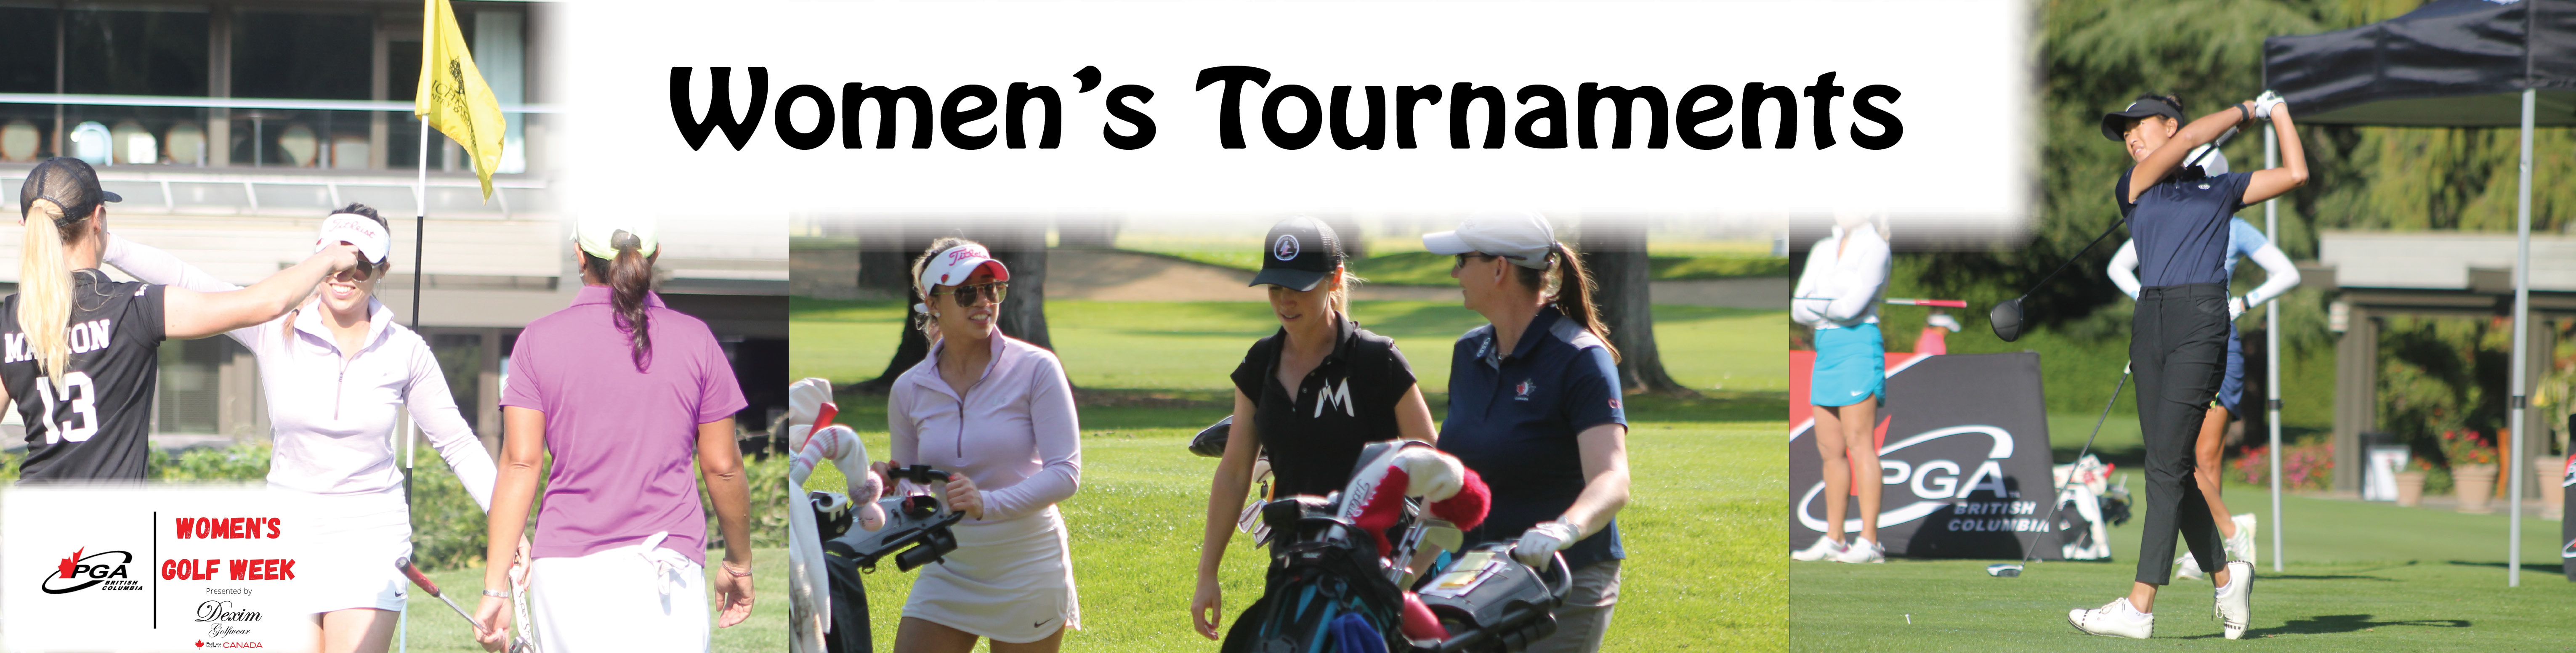 Womens Tournaments PGA of British Columbia image